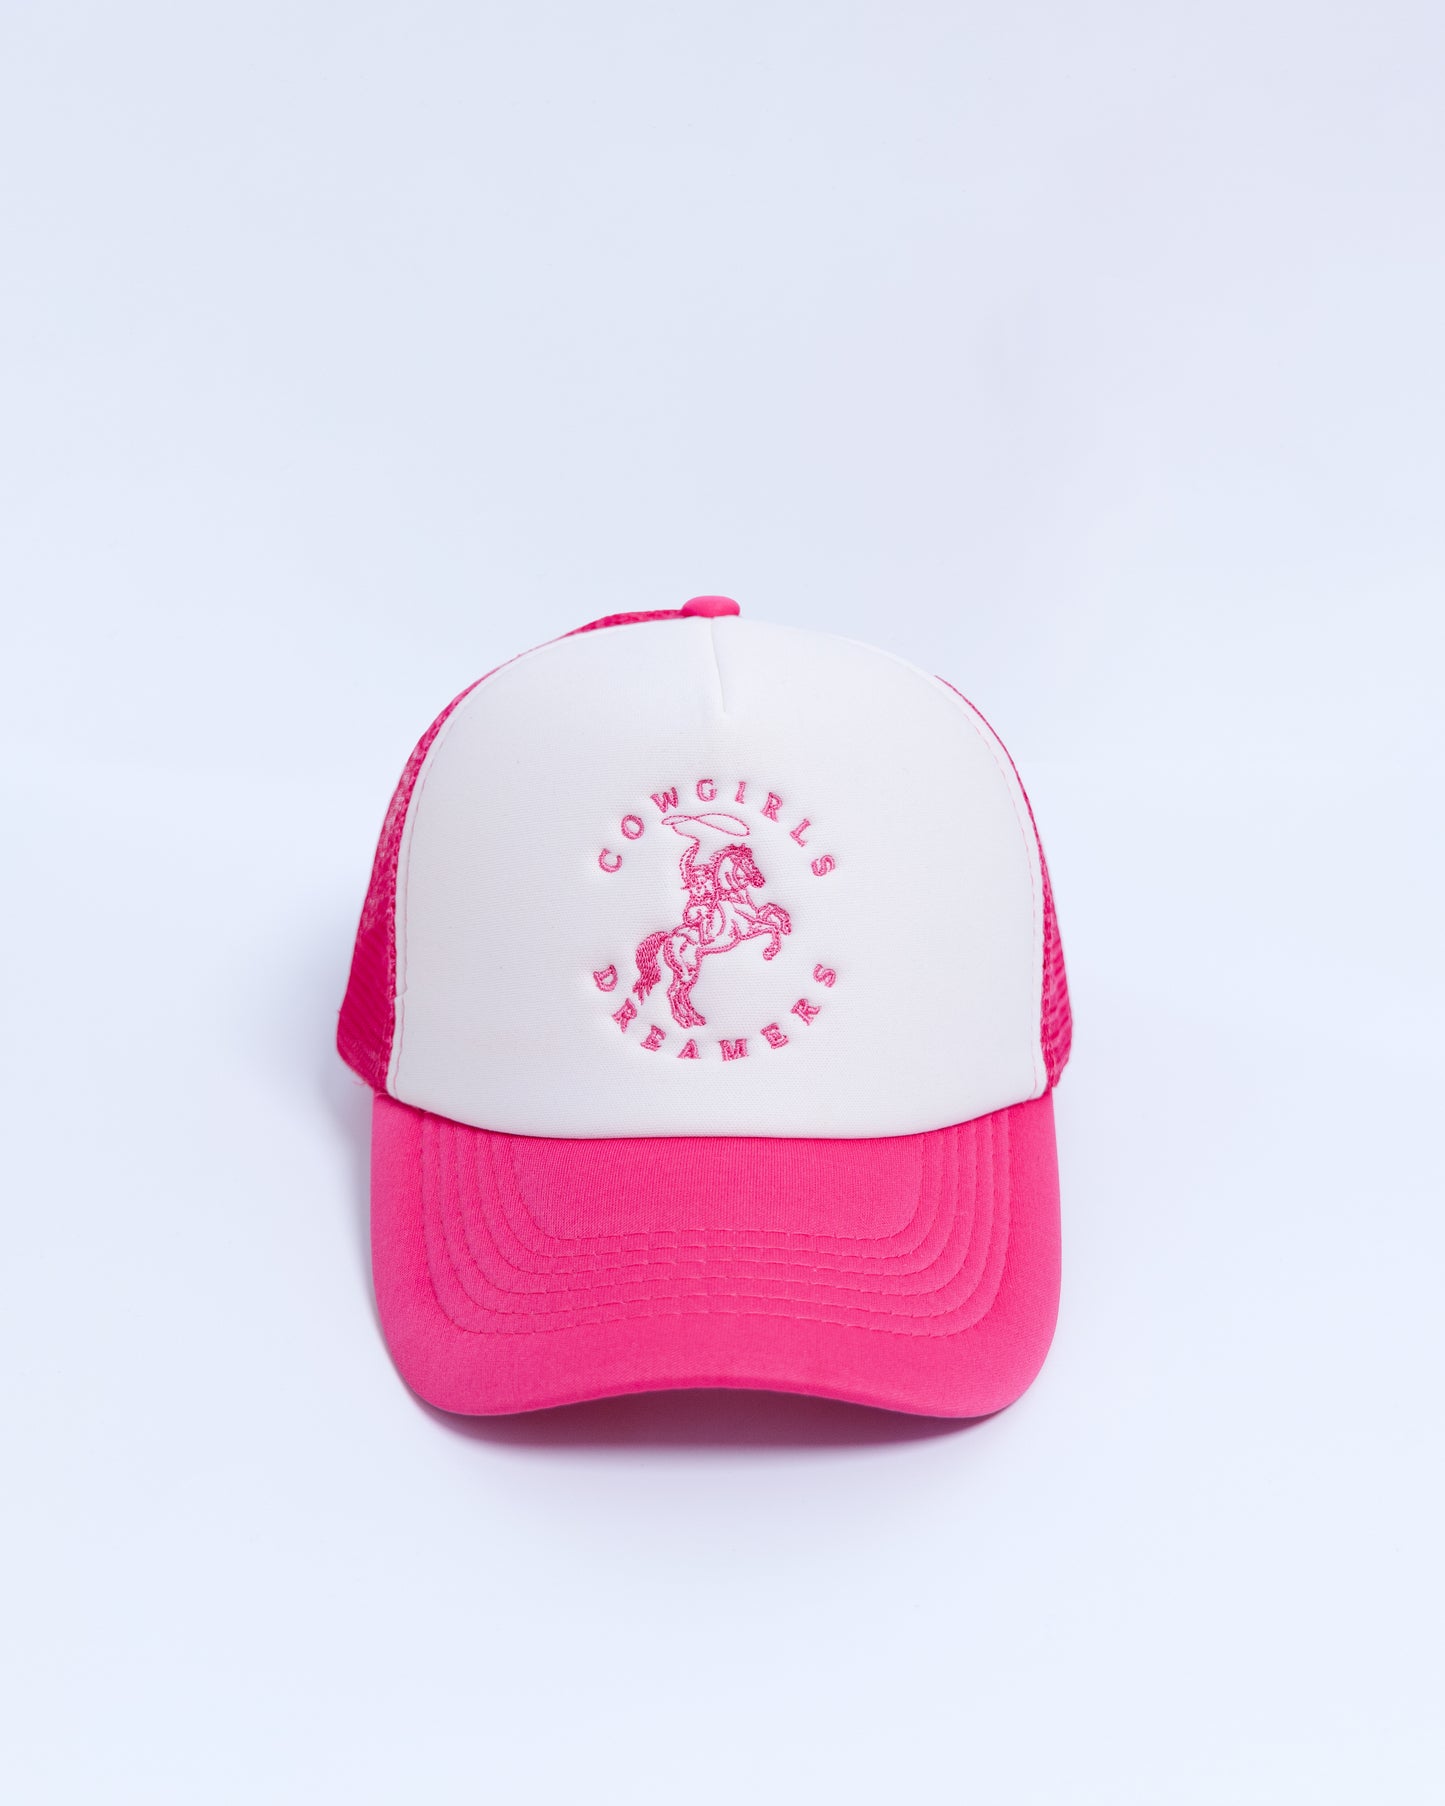 Hot Pink Trucker Hat